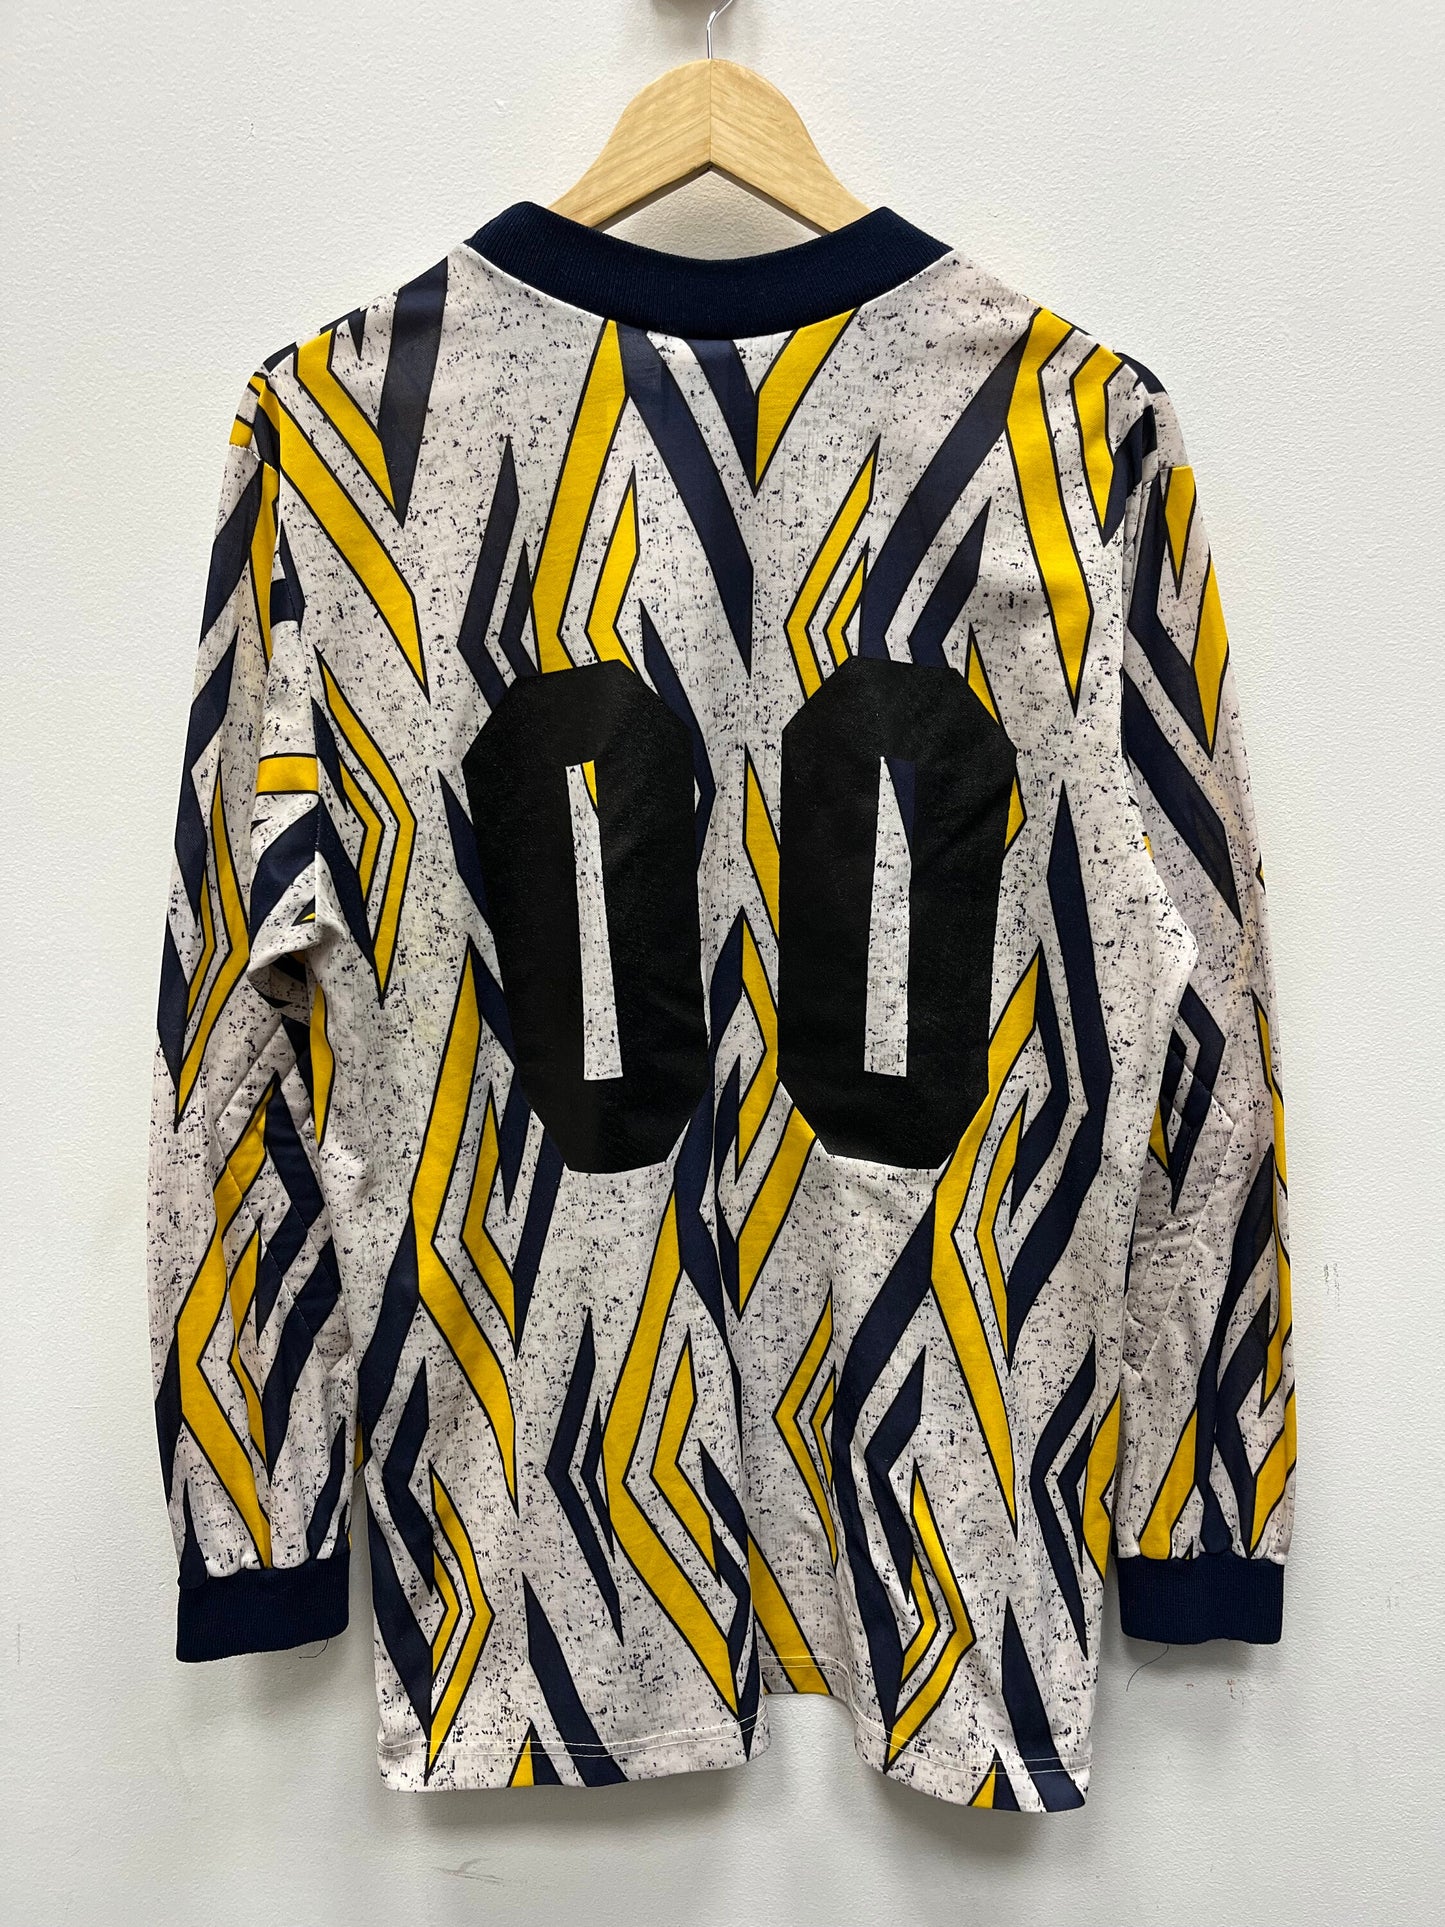 Vintage 1990’s Umbro Marist Soccer Long Sleeve Jersey